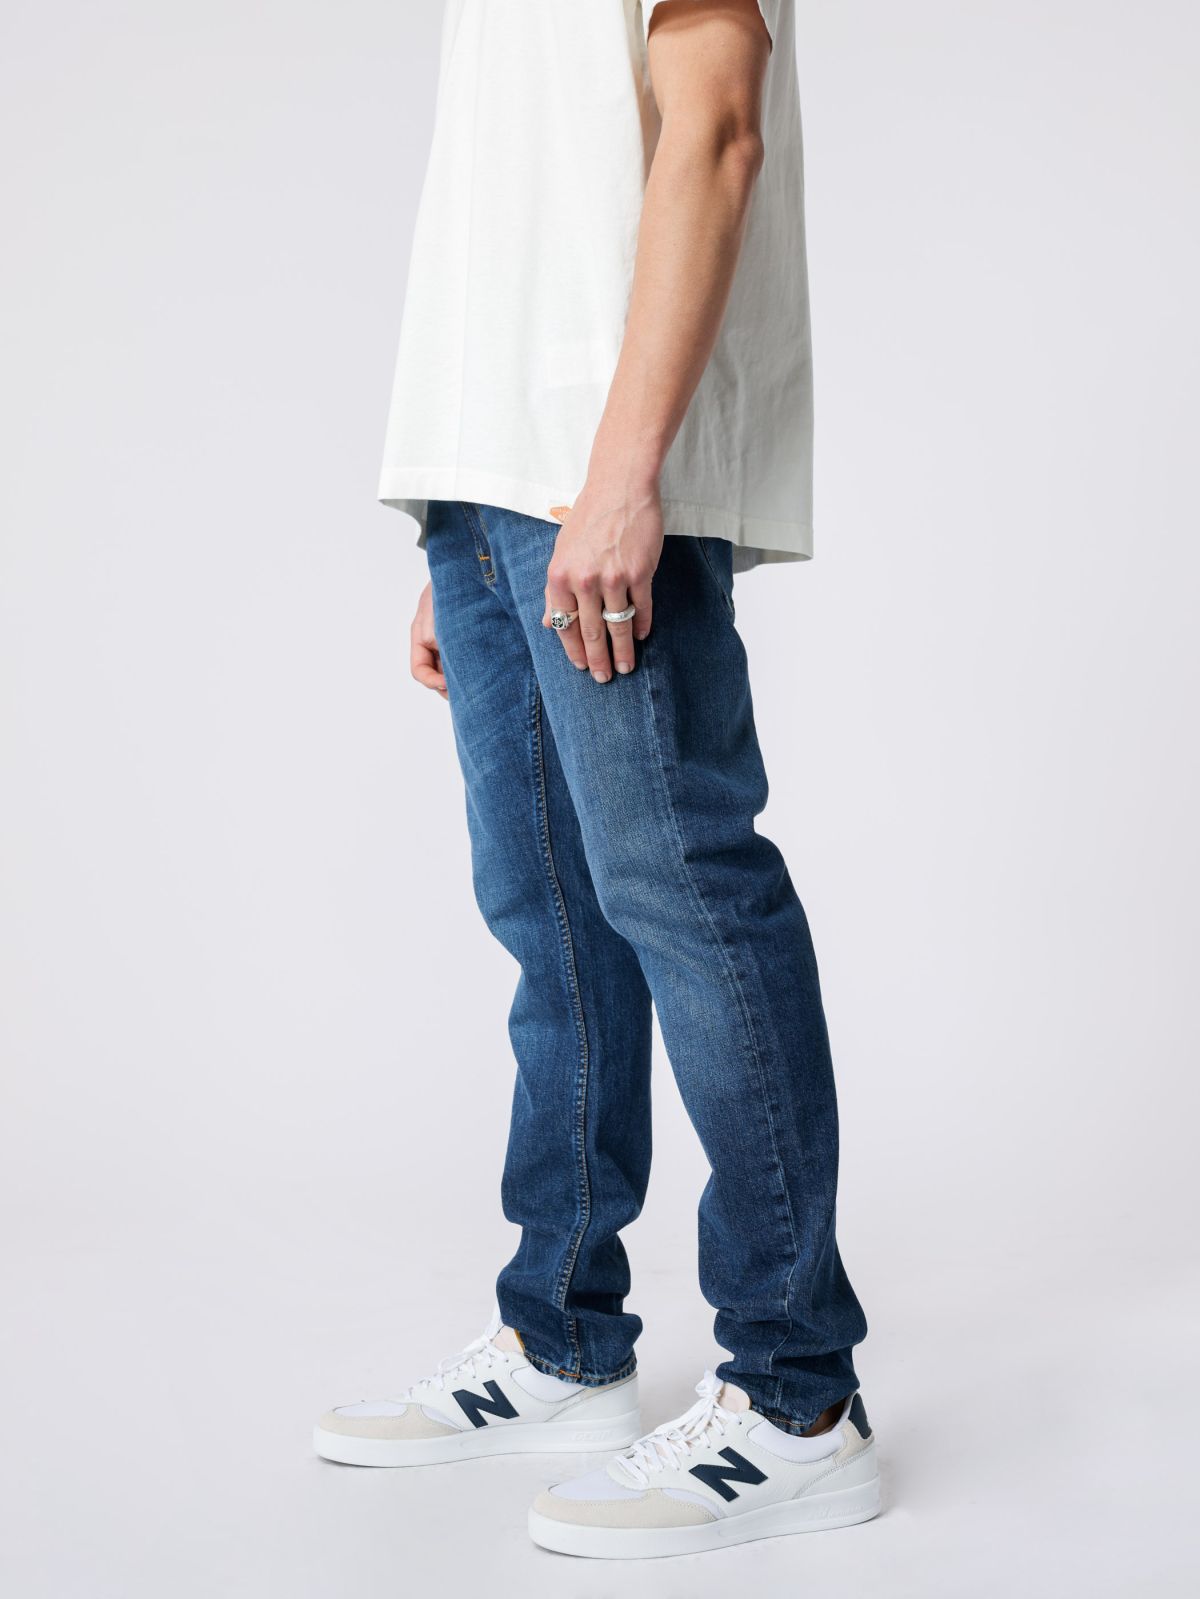  ג'ינס סלים Lean Dean של NUDIE JEANS